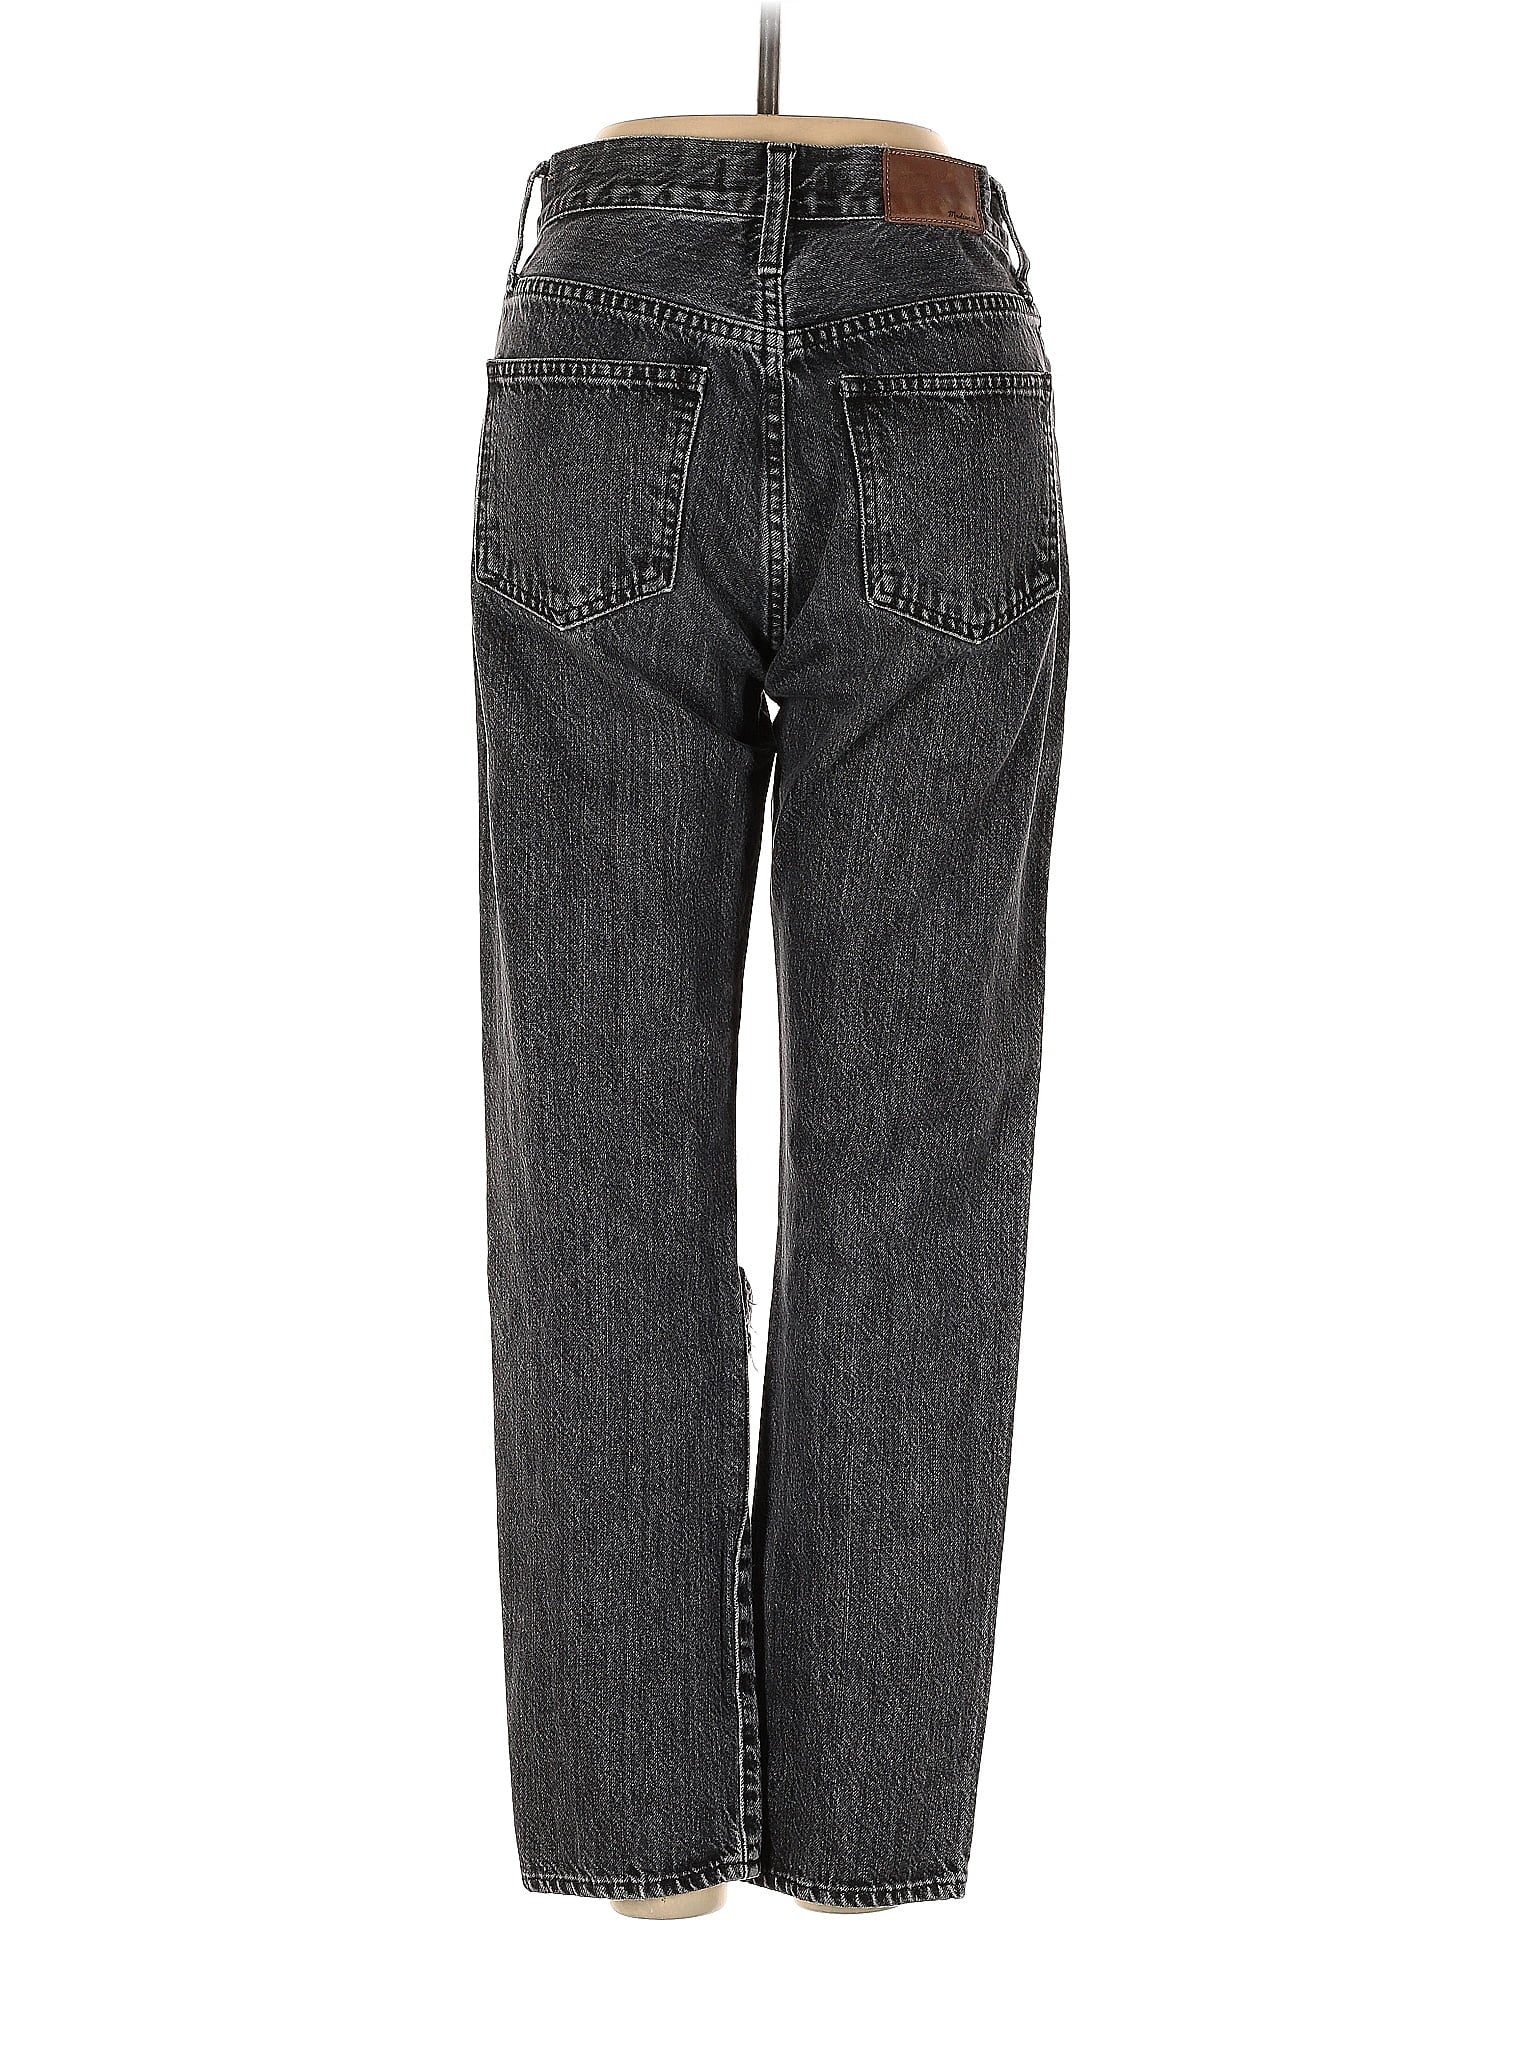 High-Rise Boyjeans Jeans in Dark Wash waist size - 24